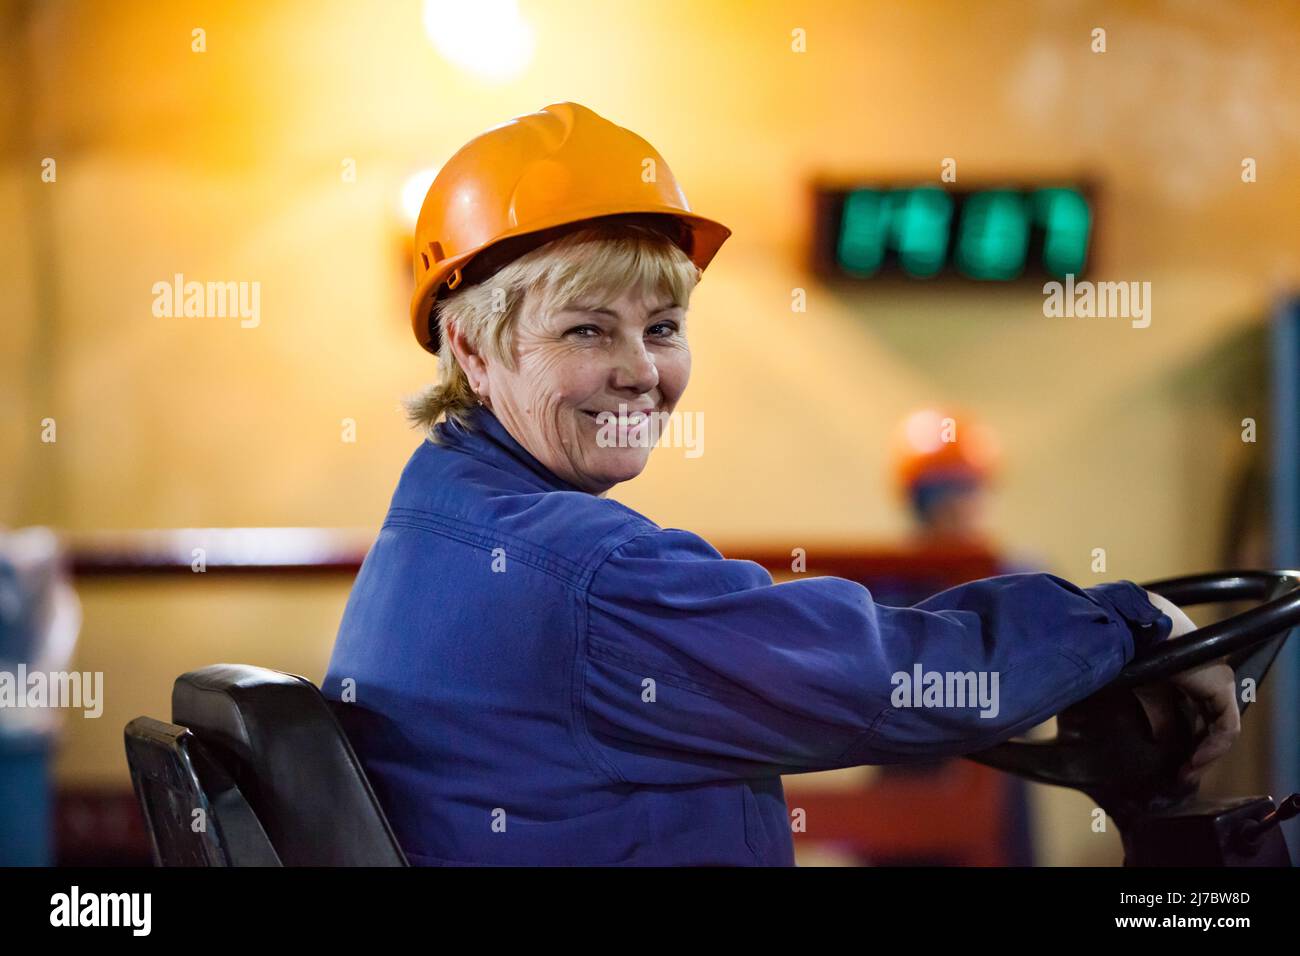 Ust'-Kamenogorsk, Kazakhstan - May 31, 2012: Portrait of blonde woman worker in yellow hardhat smiling. Electric pallet stacker operator on warehouse. Stock Photo